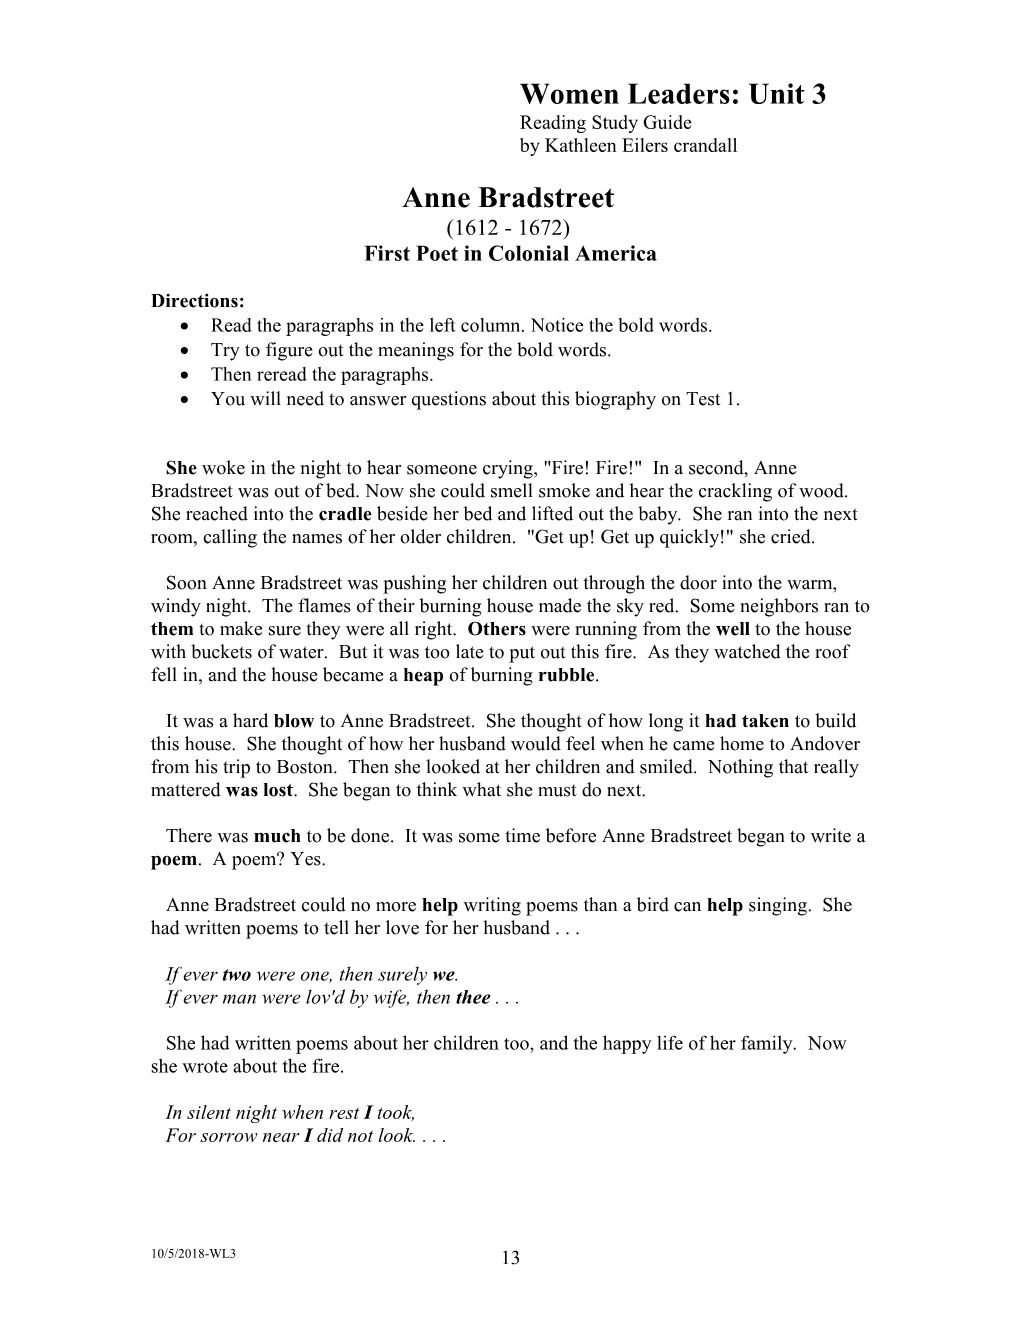 Anne Bradstreet (1612 - 1672) First Poet in Colonial America